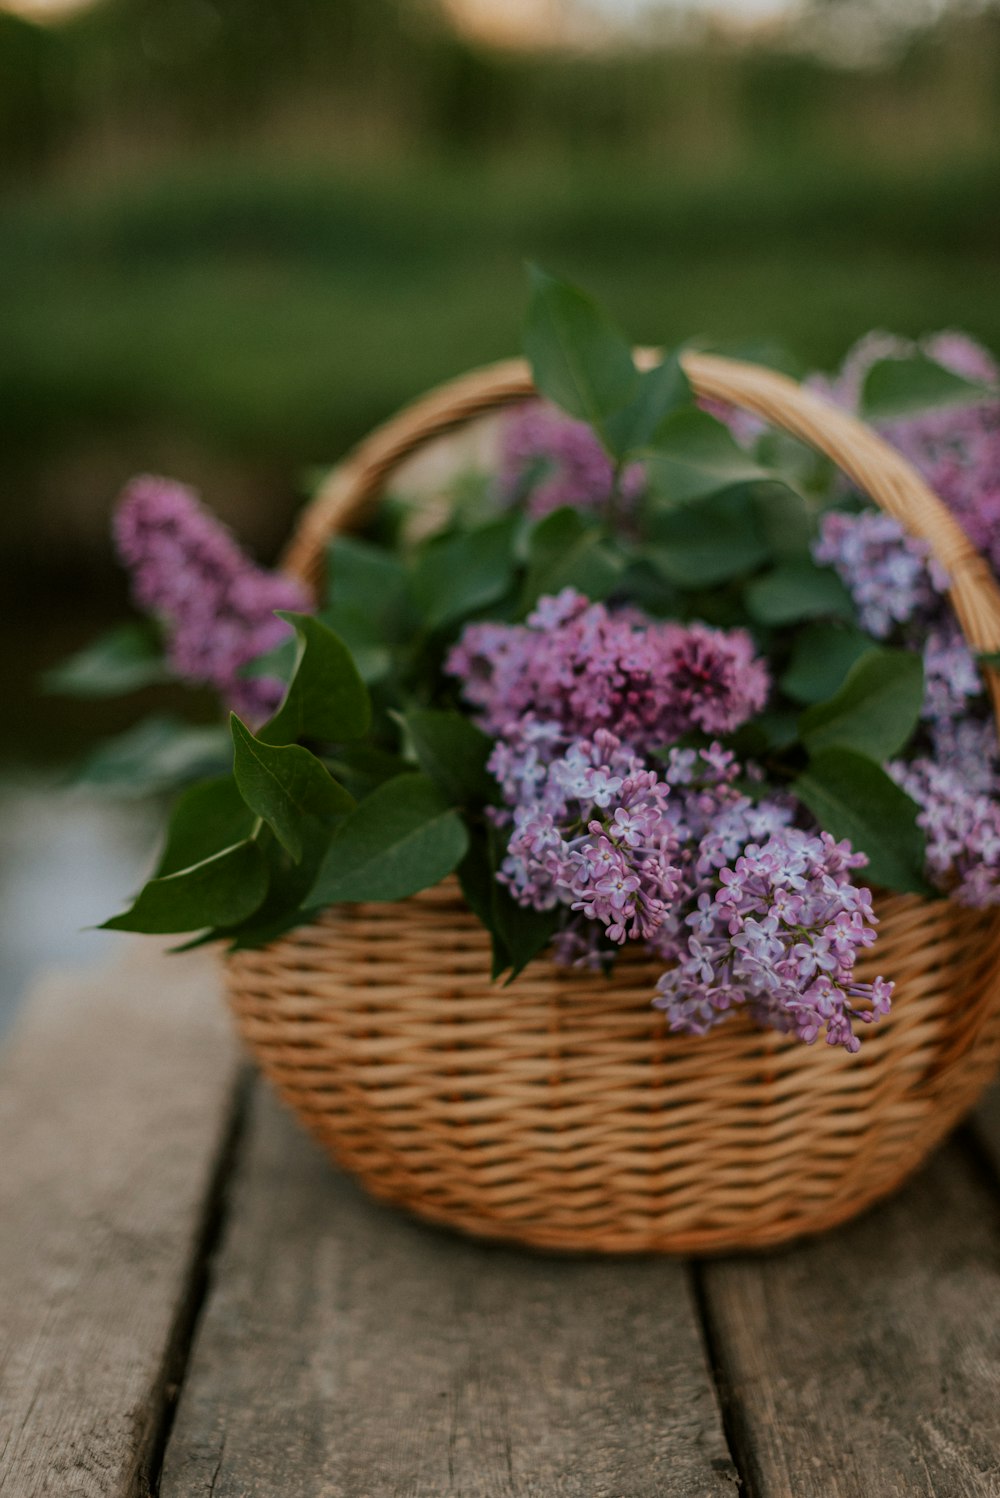 a wicker basket filled with purple flowers